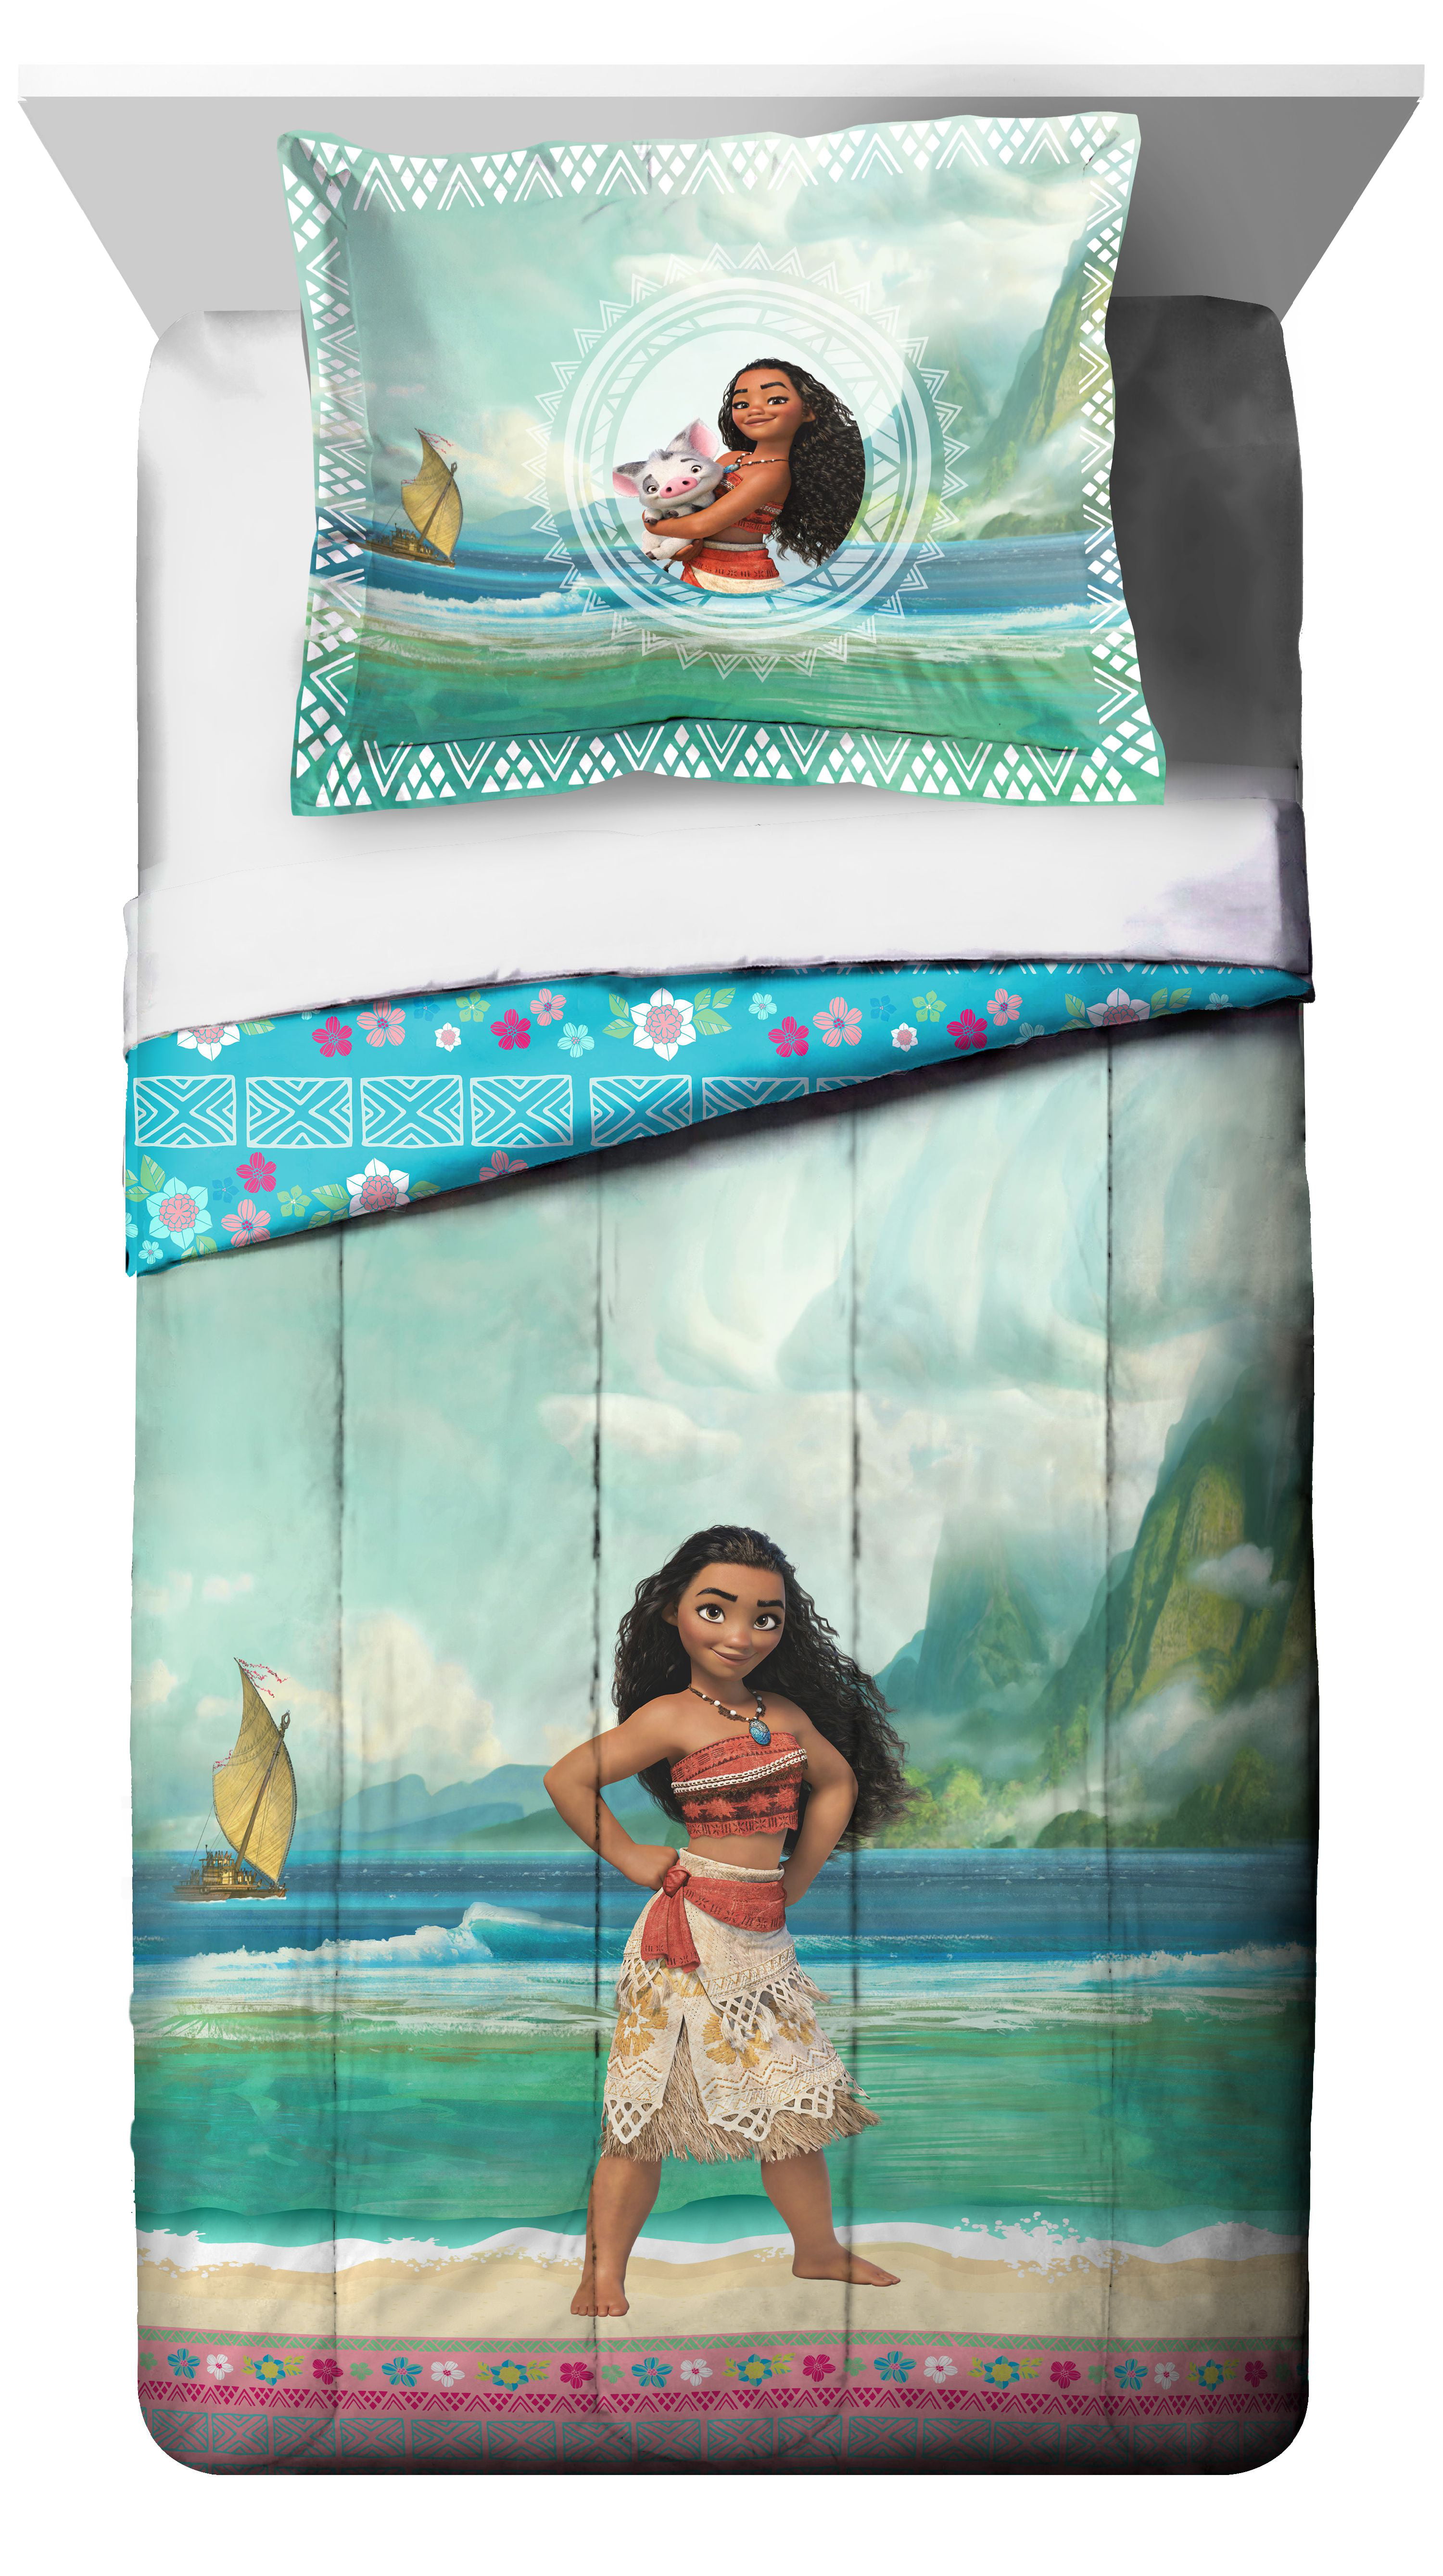 3D Disney Moana Maui Cotton Comforter Kids Summer Air Conditioning Quilt Blanket 